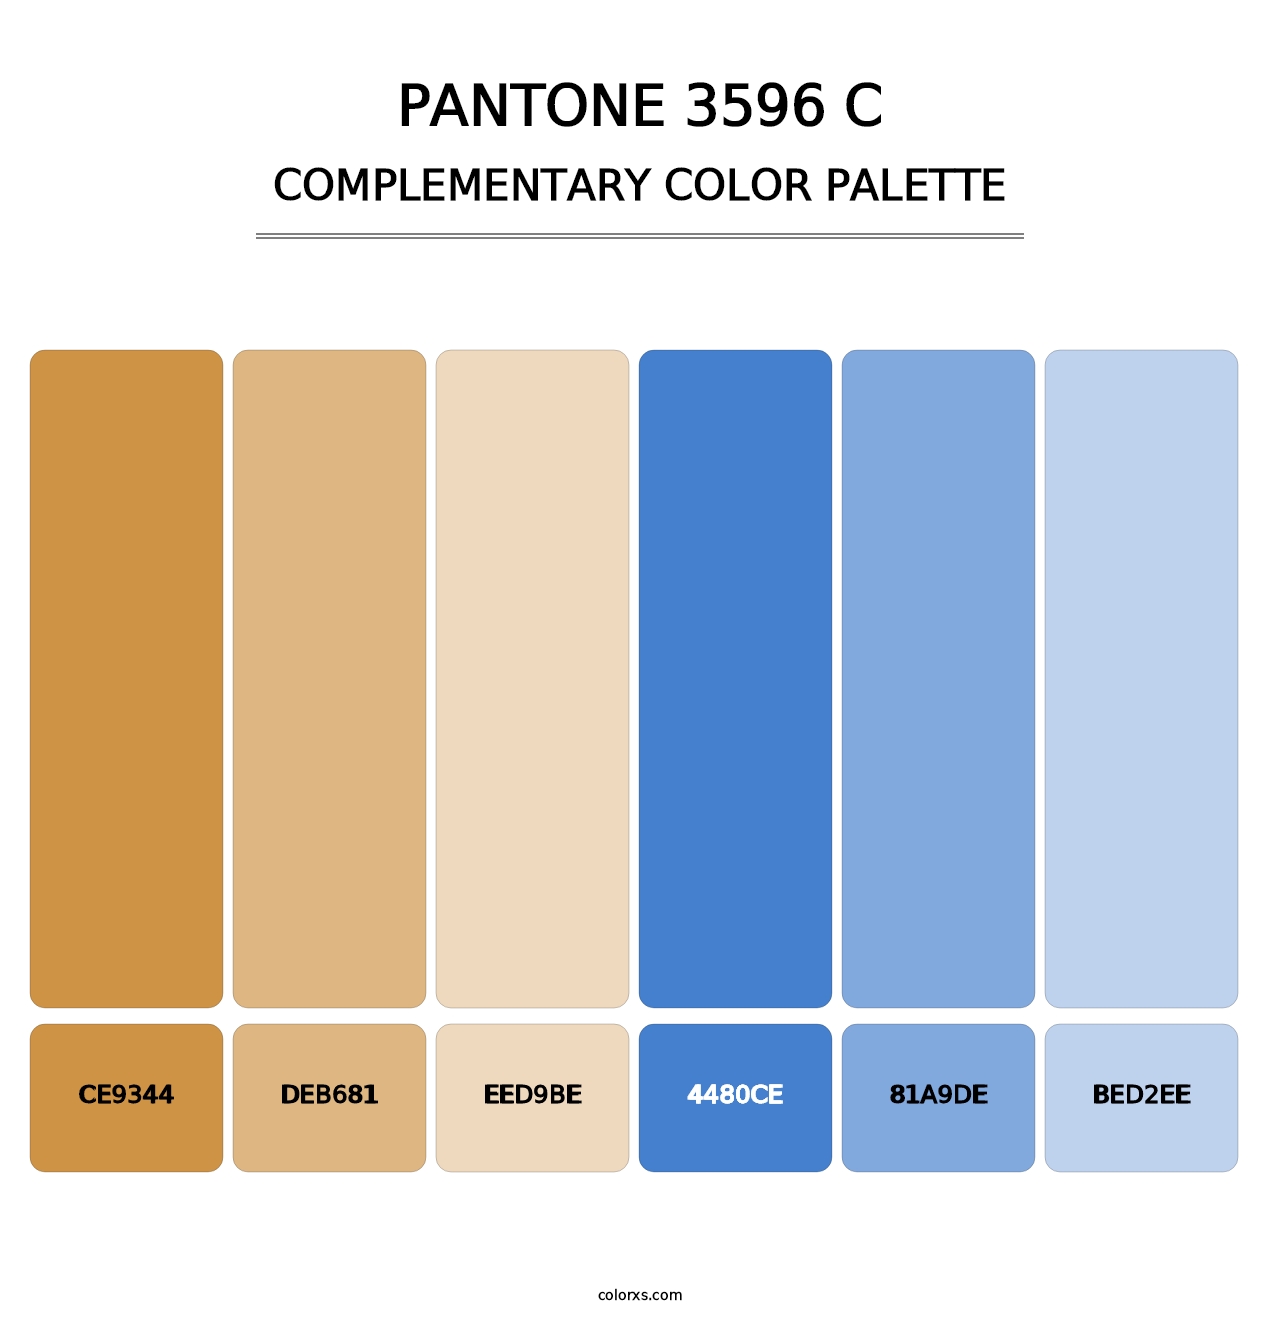 PANTONE 3596 C - Complementary Color Palette